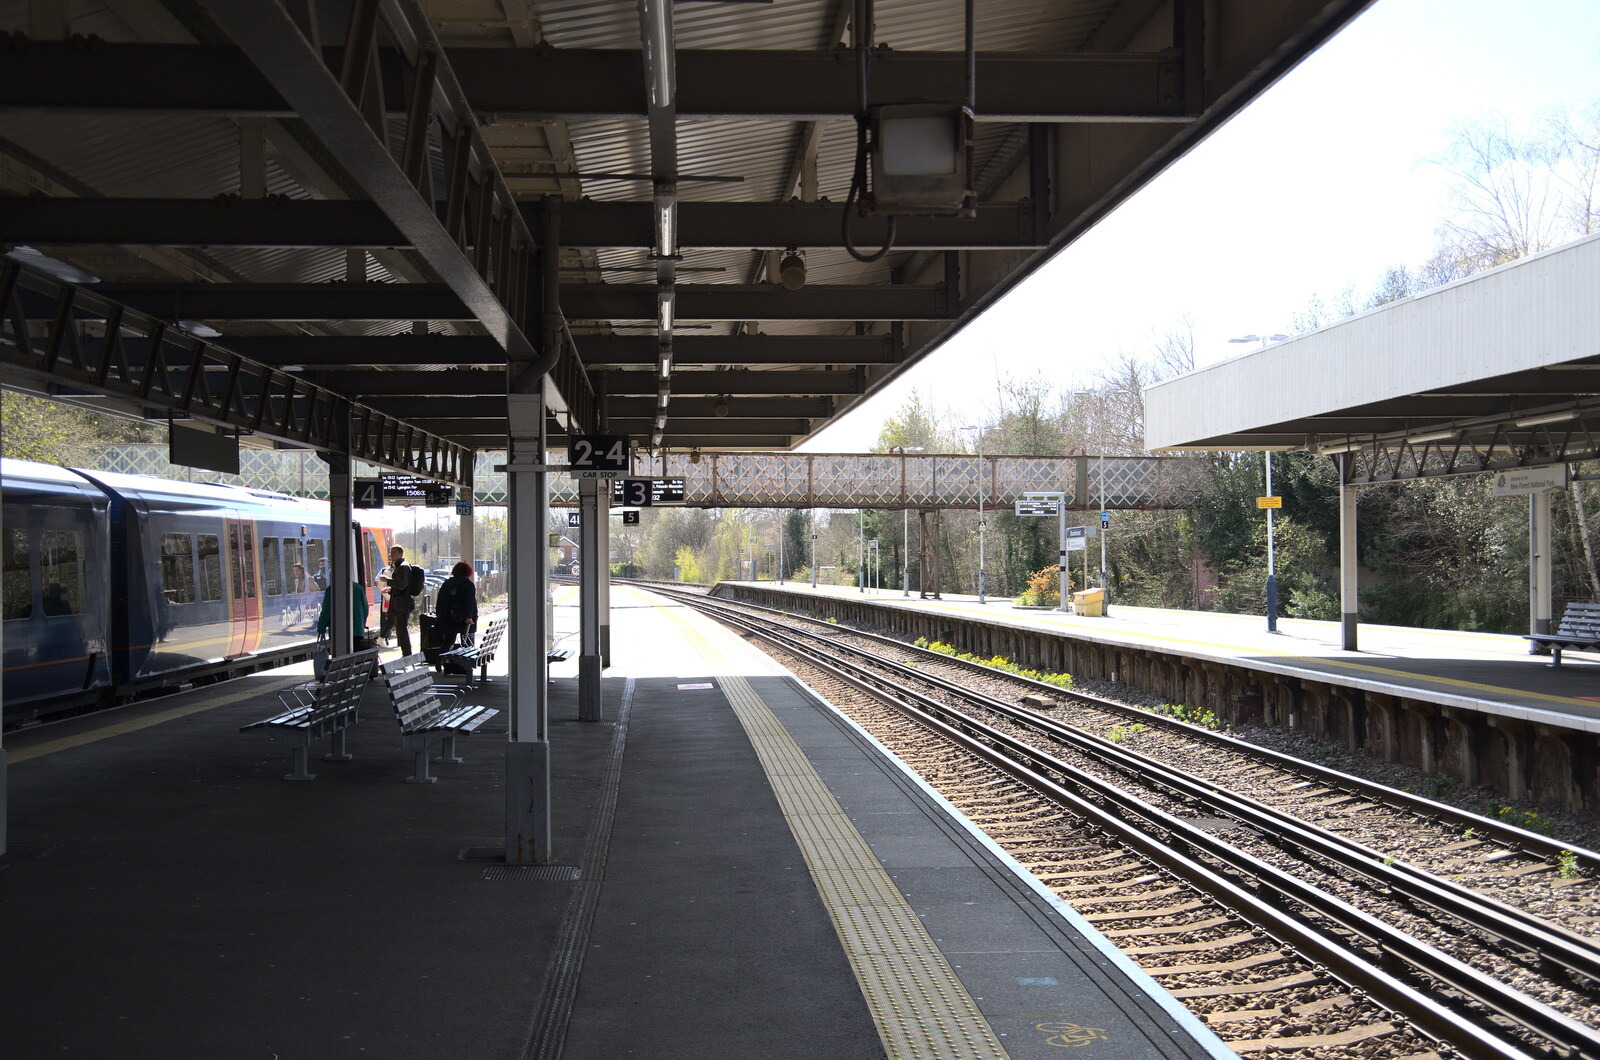 A Trip Down South, New Milton, Hampshire - 9th April 2022: On the platform at Brockenhurst Station